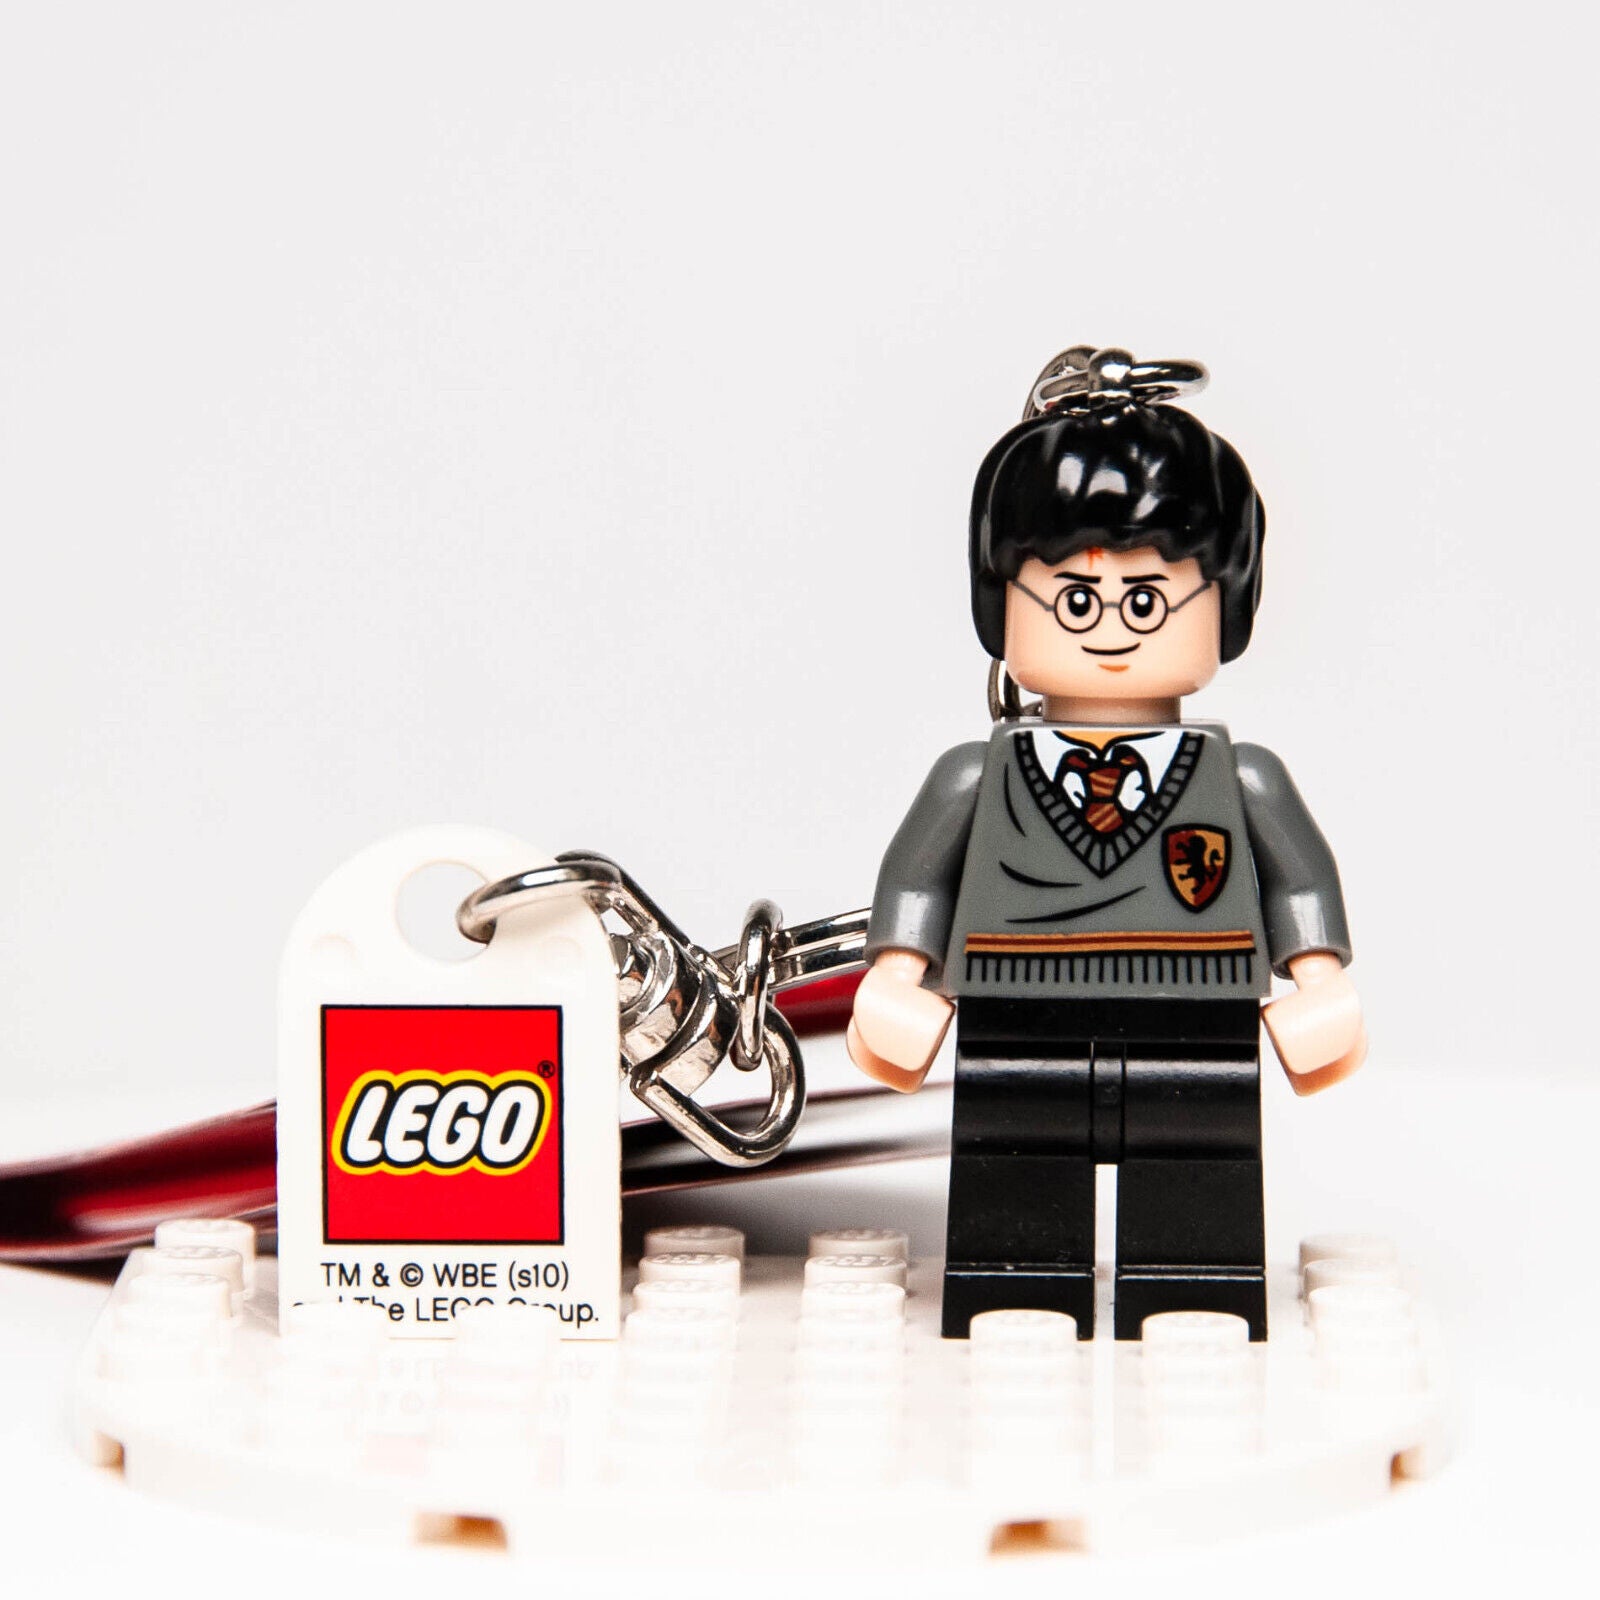 NEW Lego Minifigure Key Chain - Harry Potter Gryffindor Crest - 852954